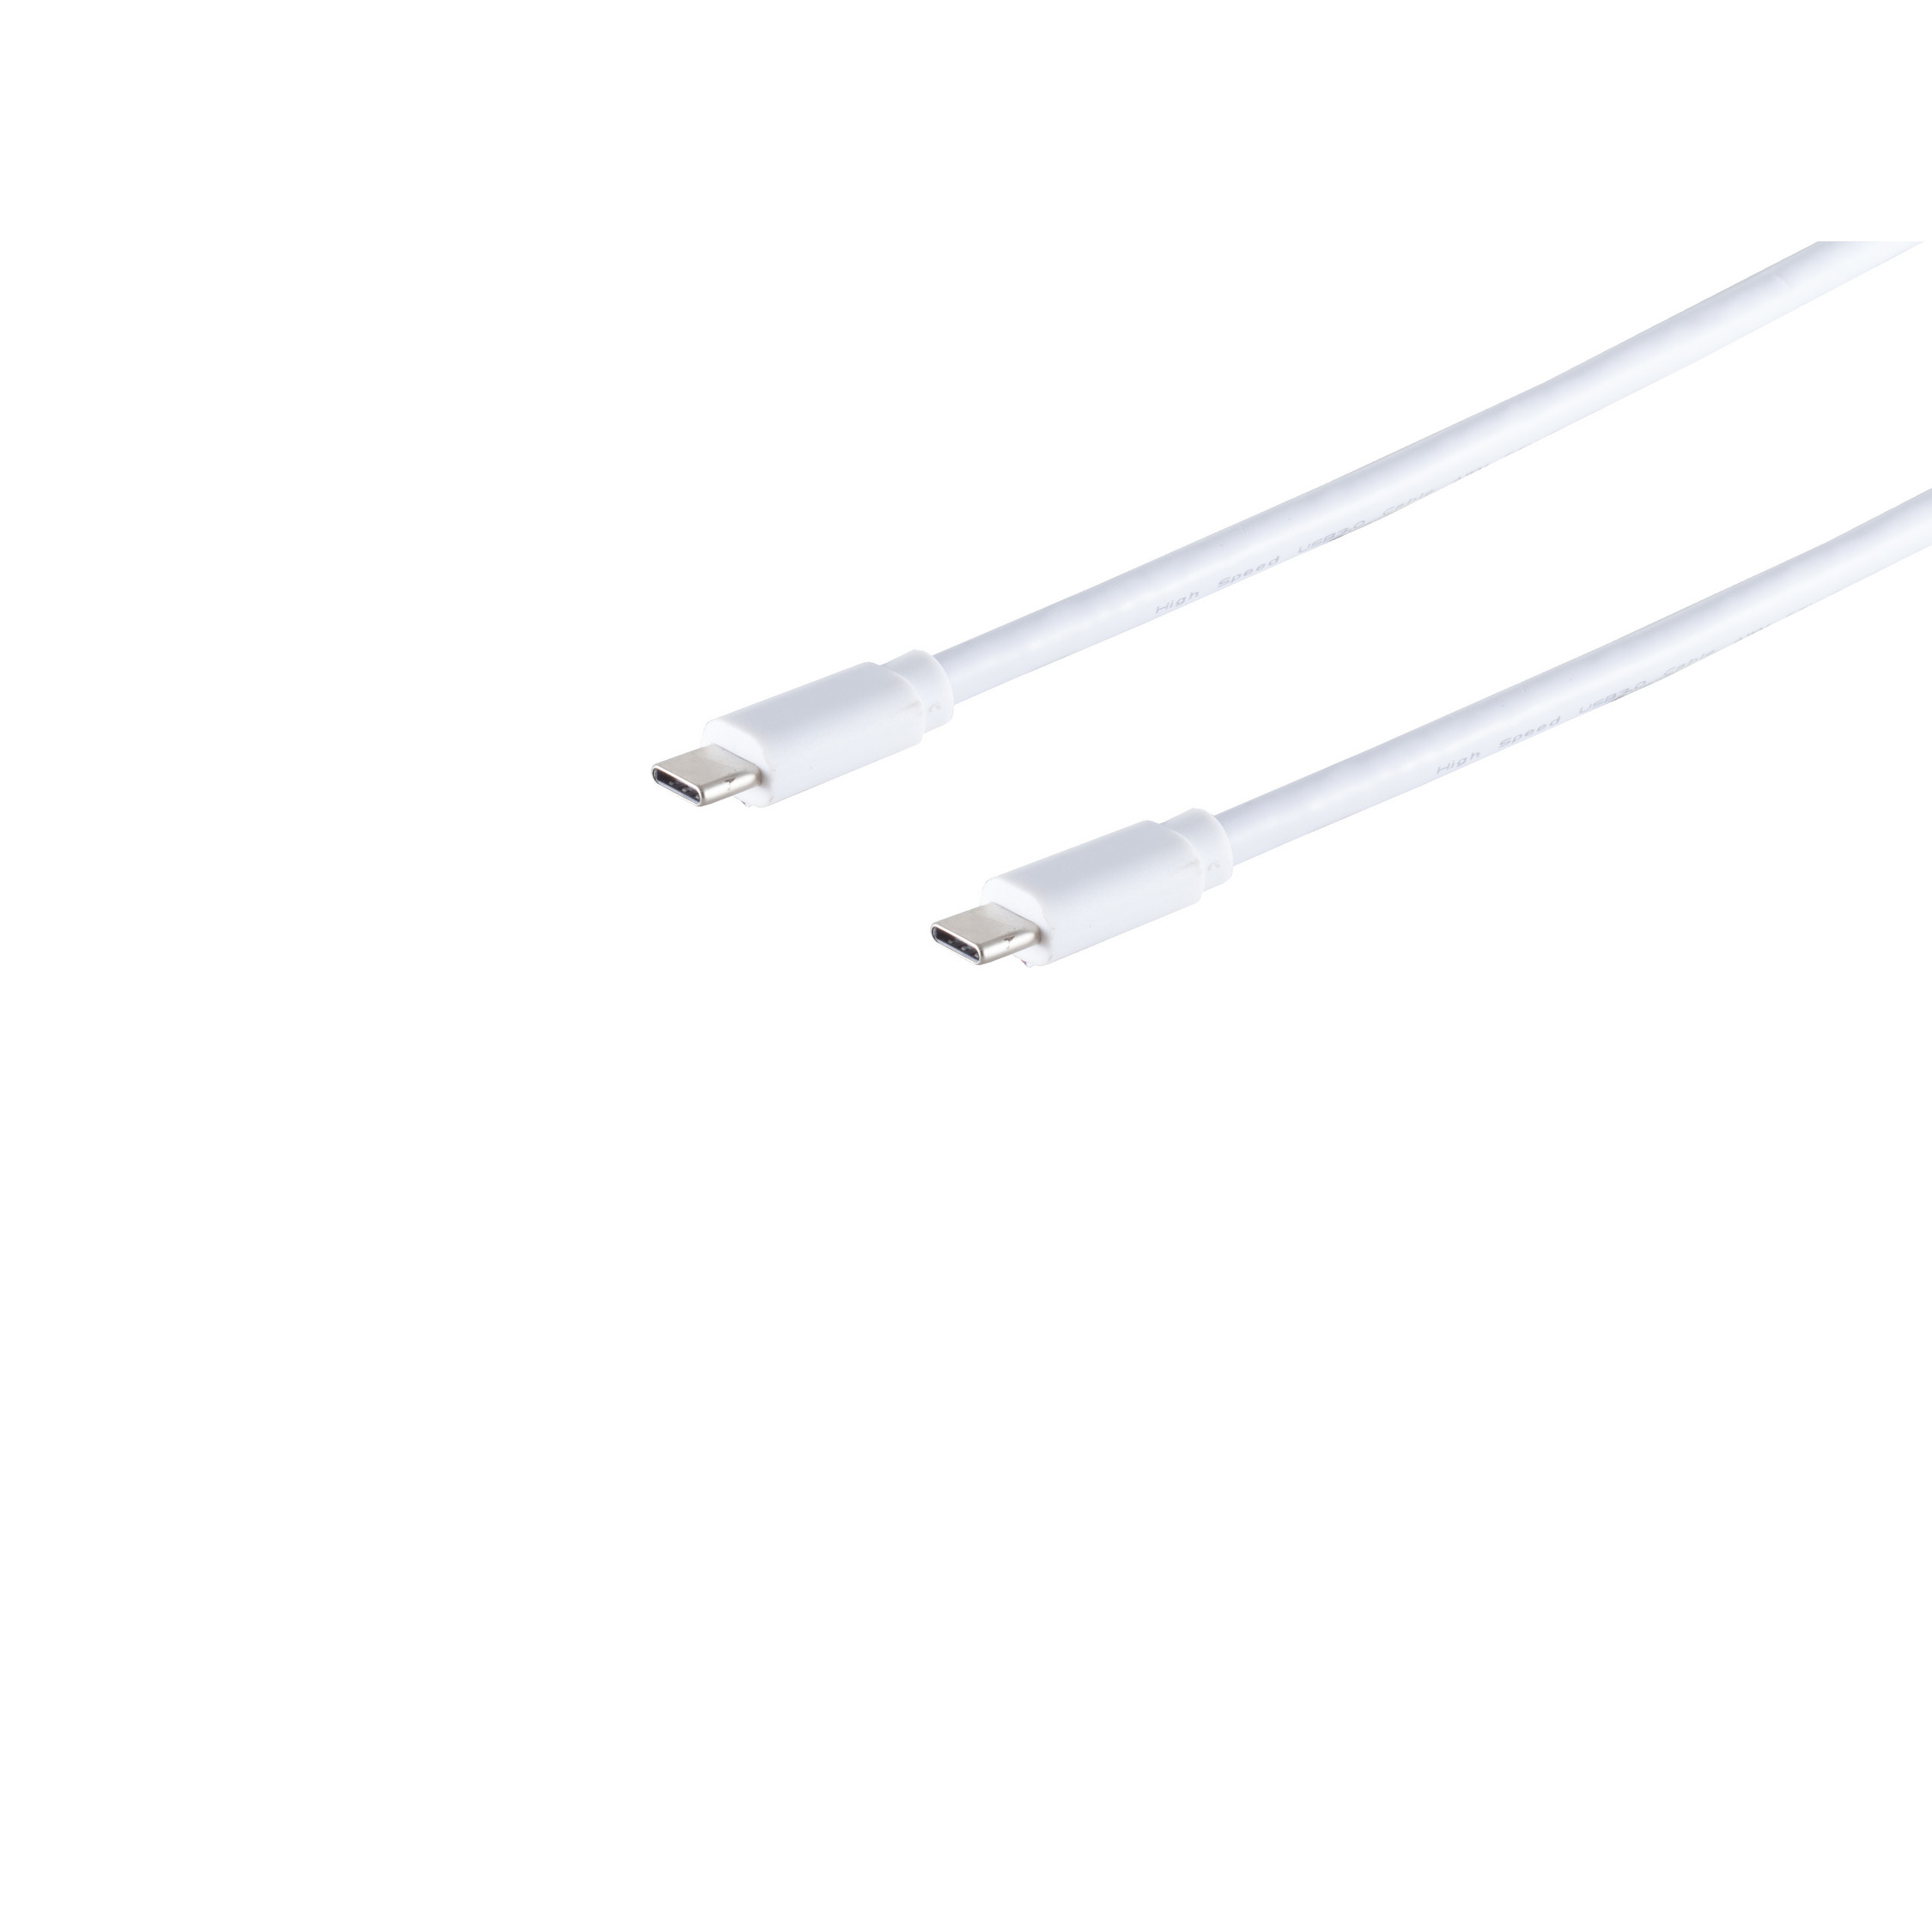 USB 3.1 1,5m Stecker-USB C weiß MAXIMUM S/CONN Kabel Stecker CONNECTIVITY Kabel USB 3.1A